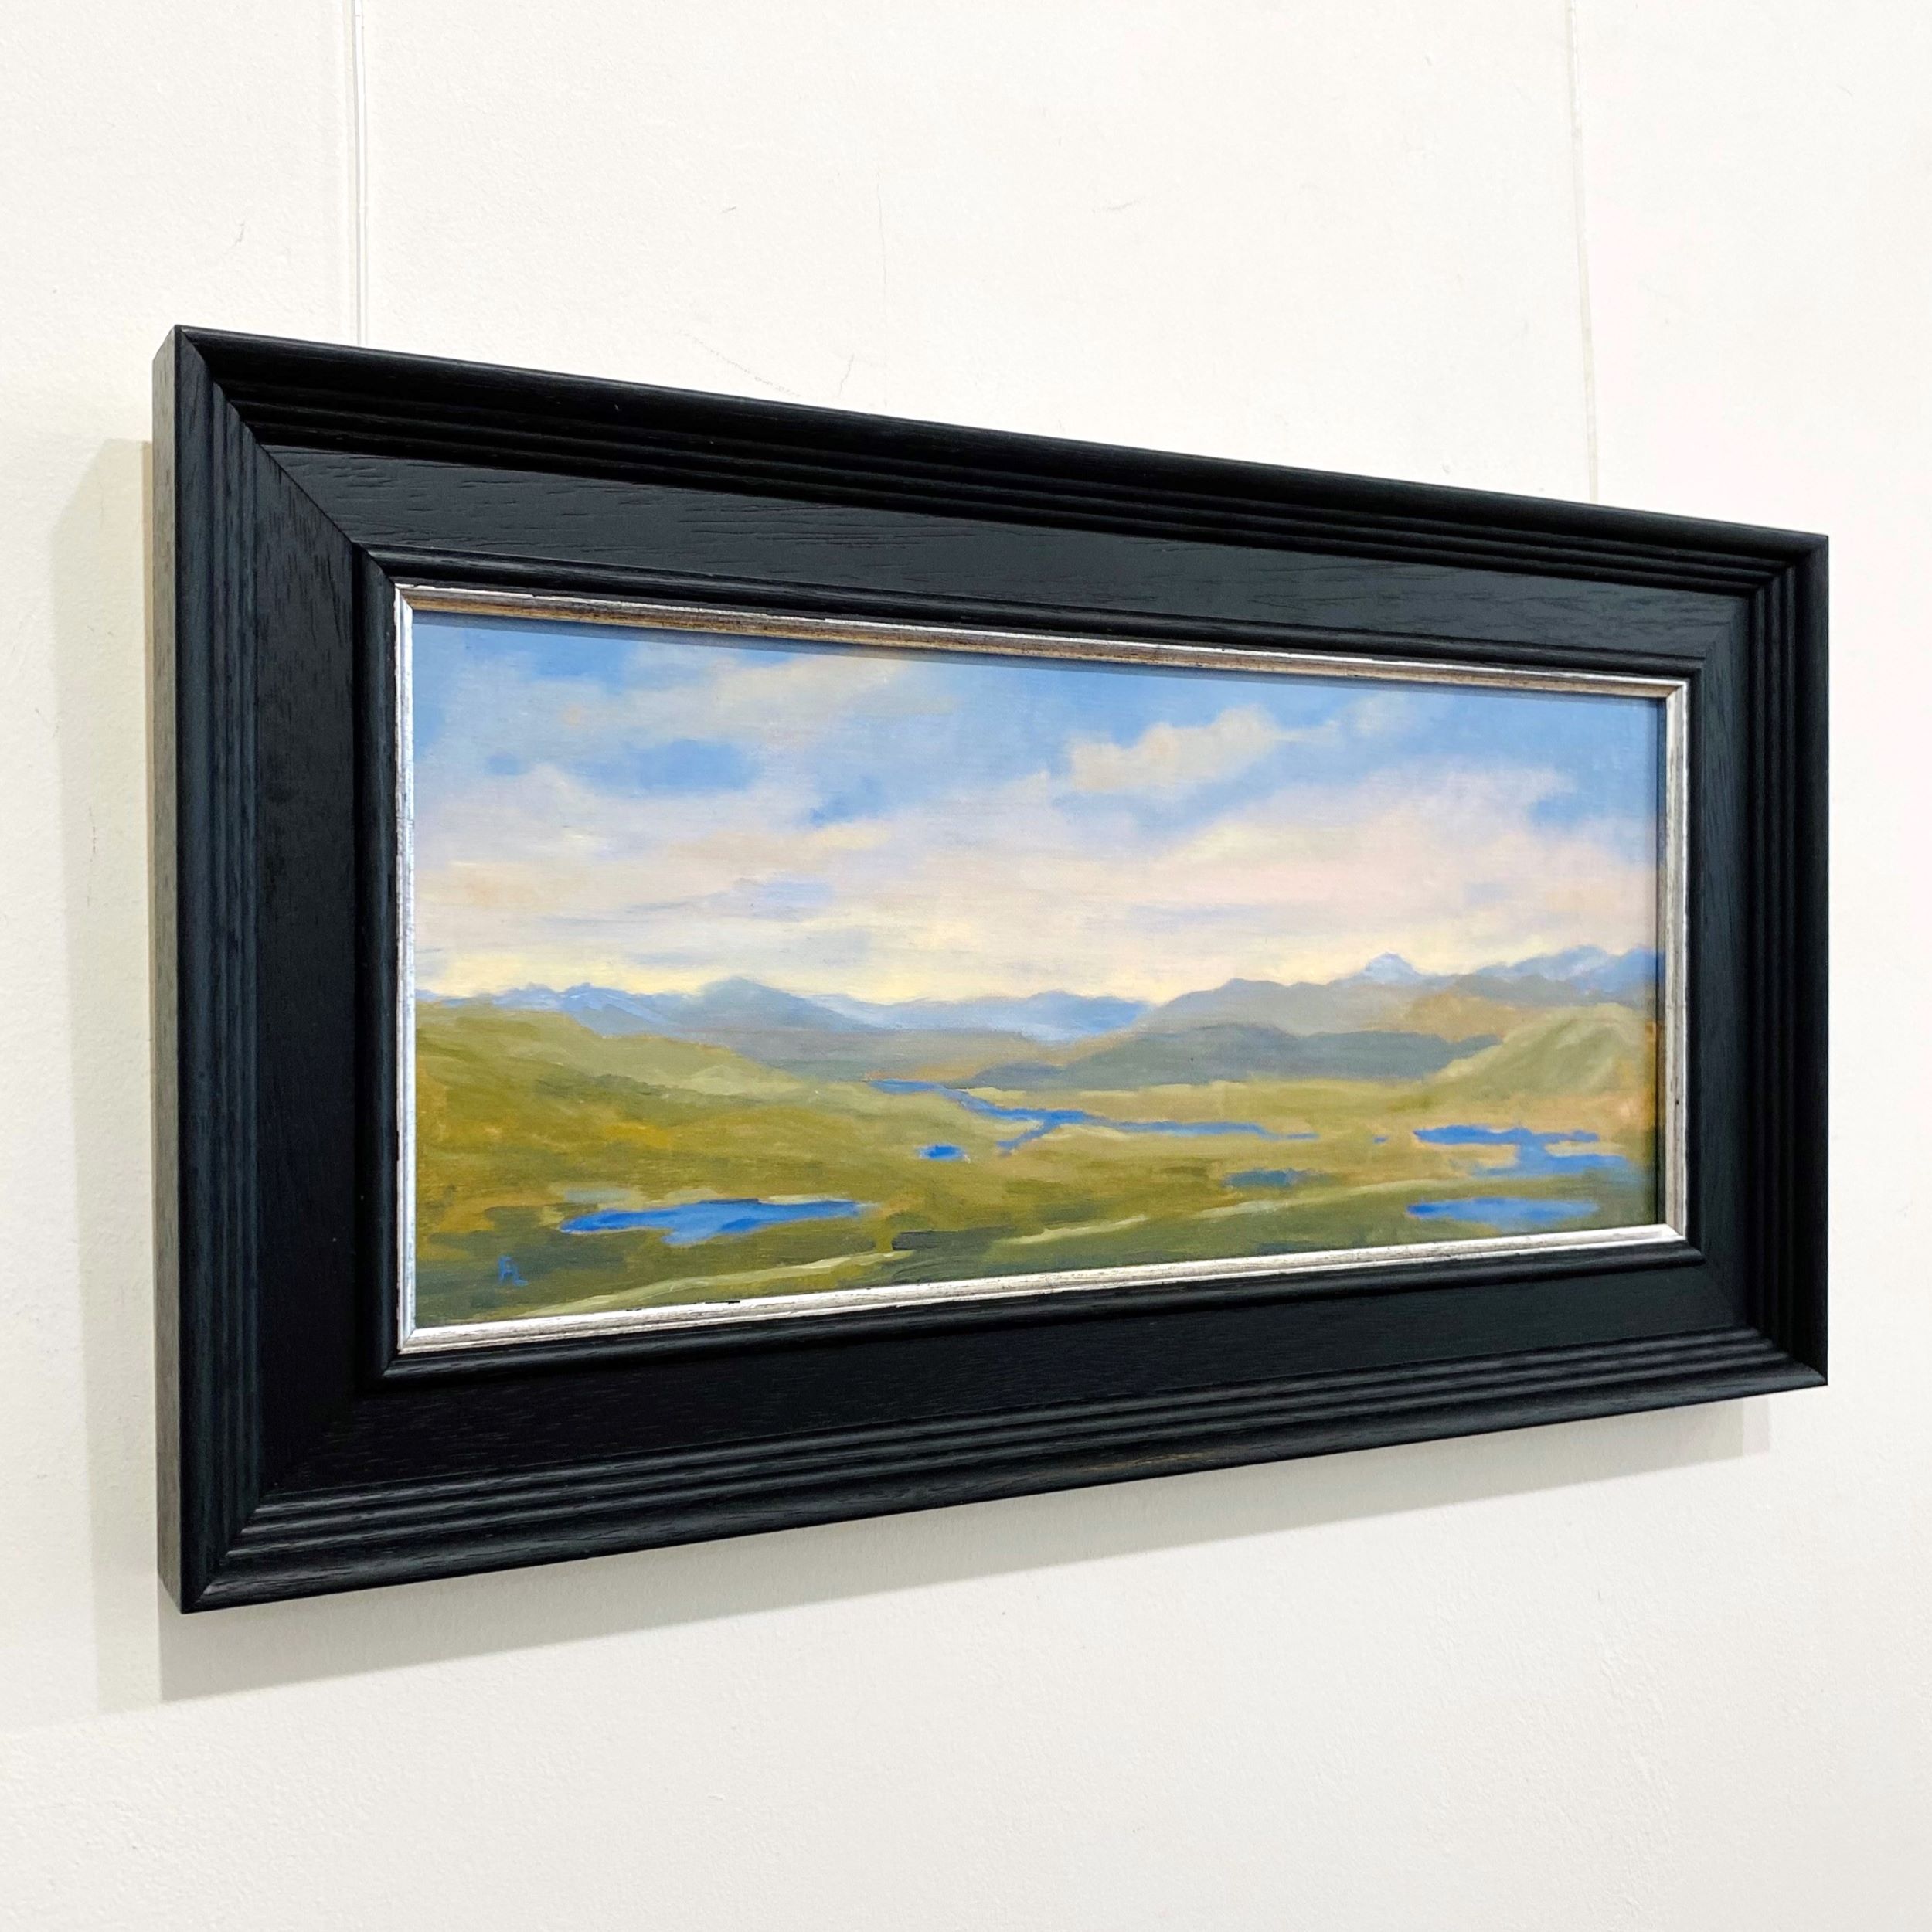 'Warm Skies Over Rannoch Moor' by artist Fiona Longley